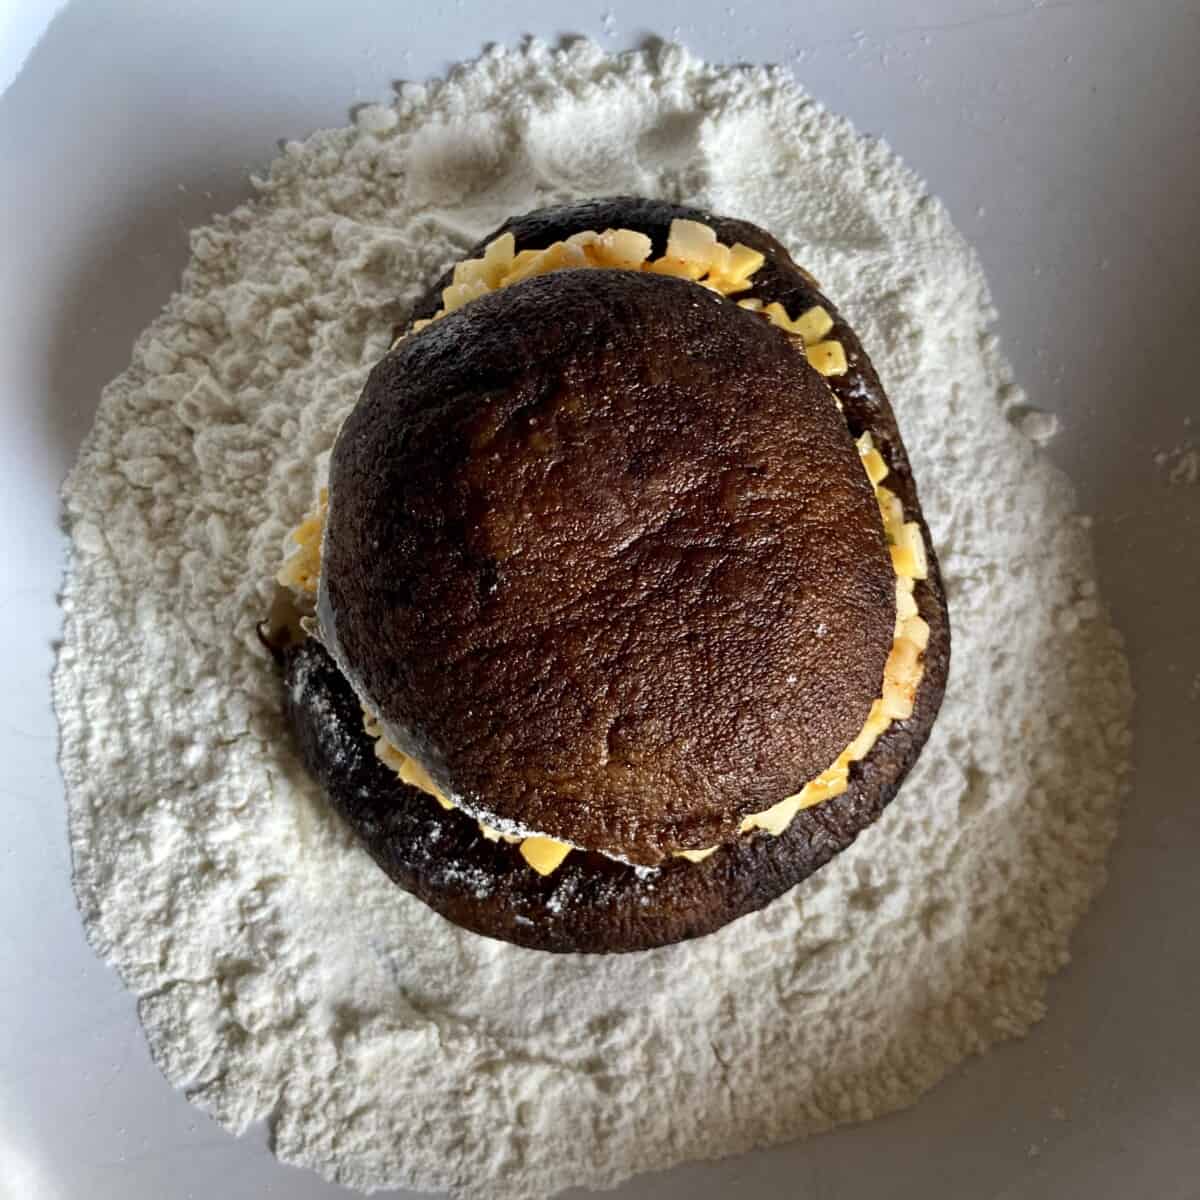 cheese stuffed portobello mushroom in a bowl of flour